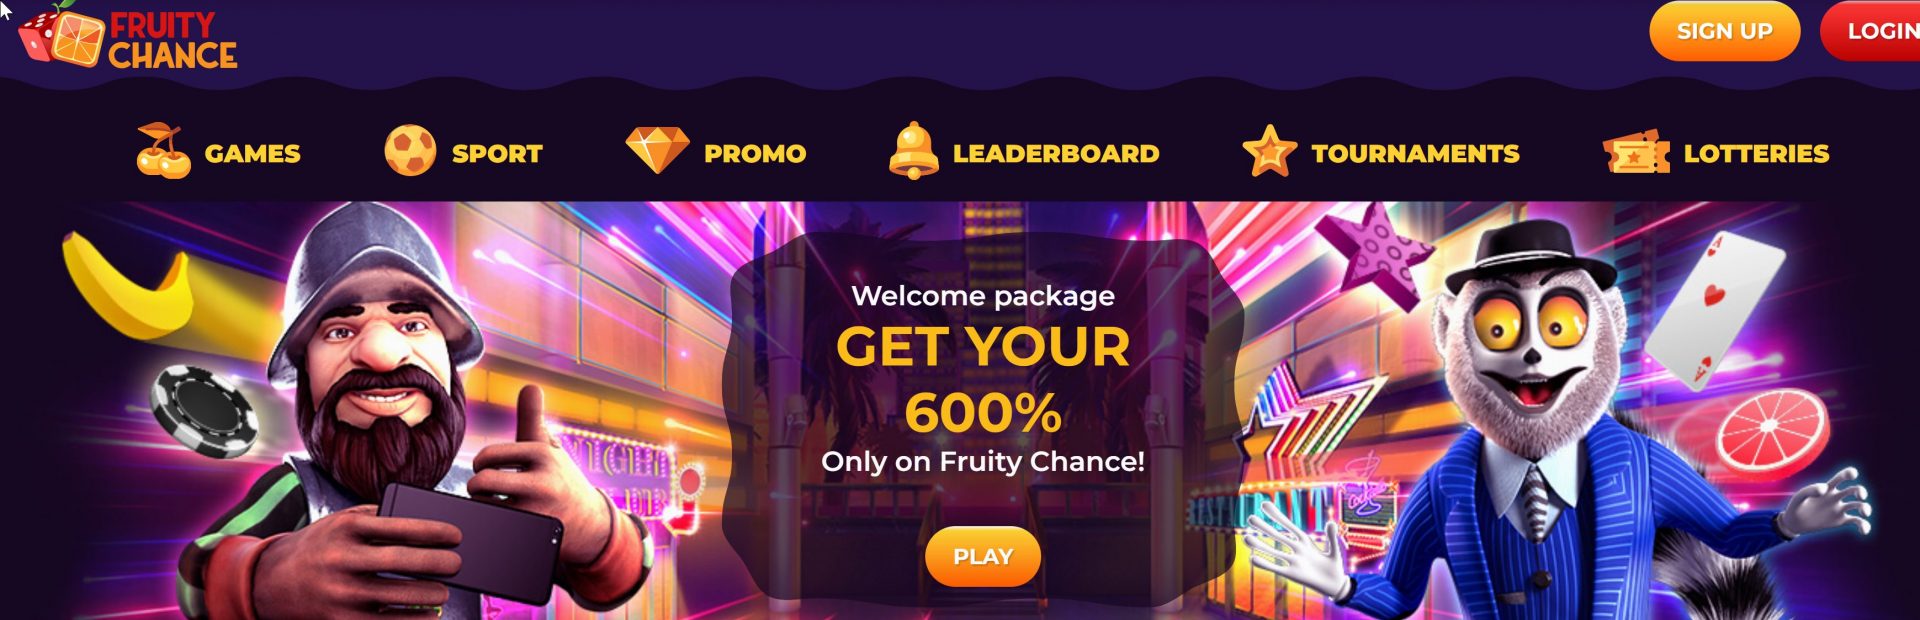 fruity chance casino uk